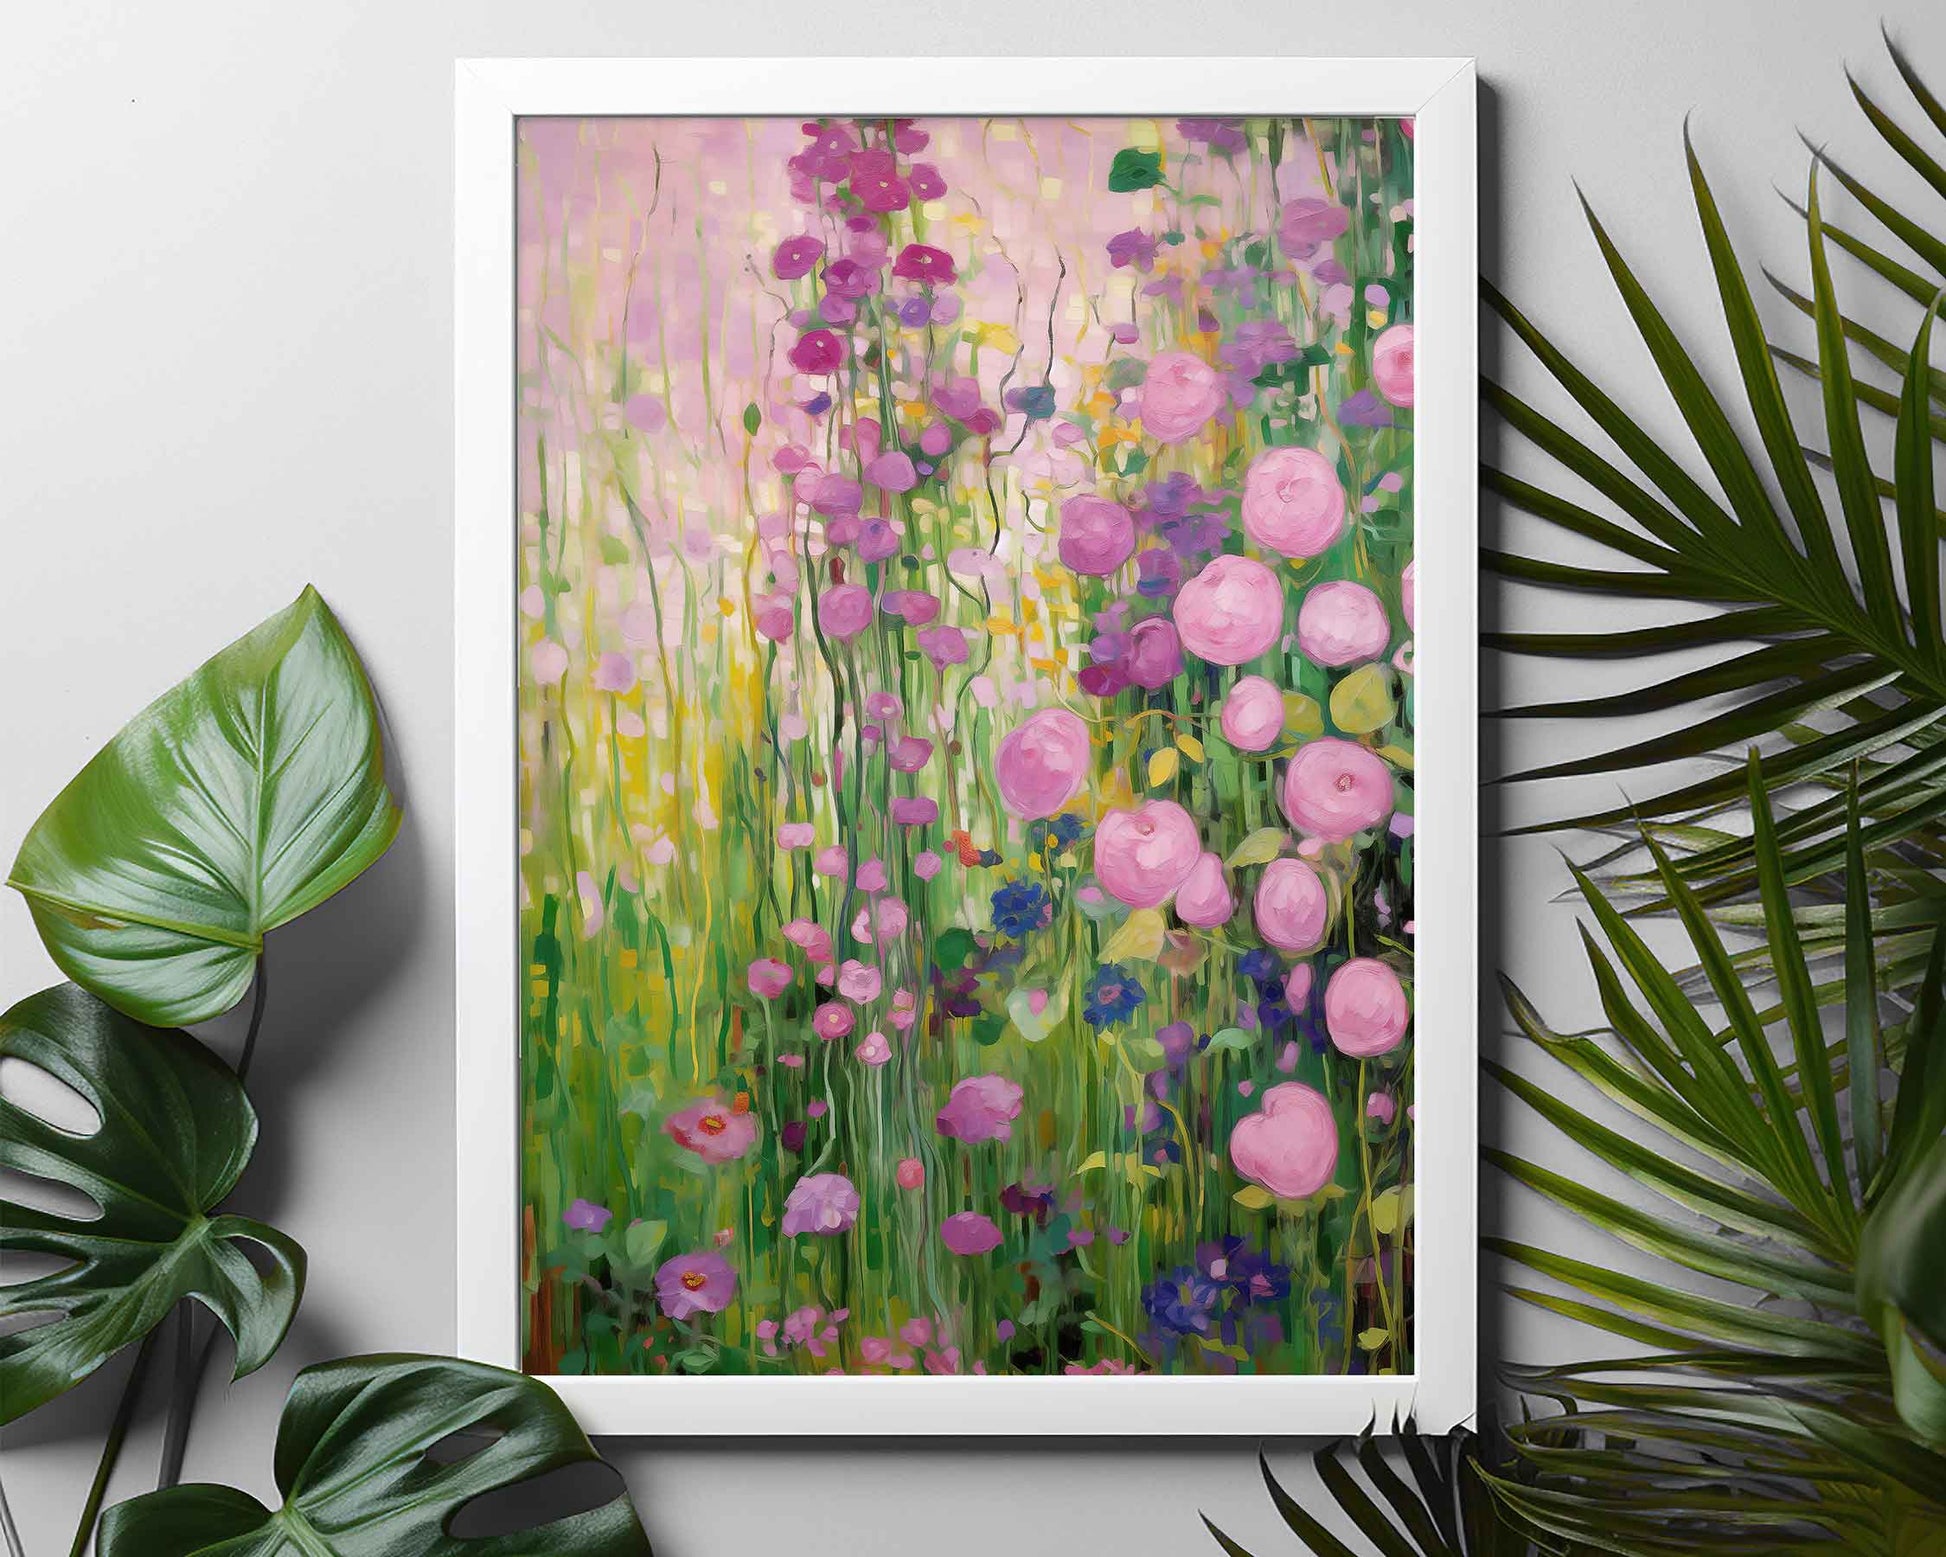 Framed Image of Gustav Klimt Style Pink and Purple Flowers Wall Art Print Poster